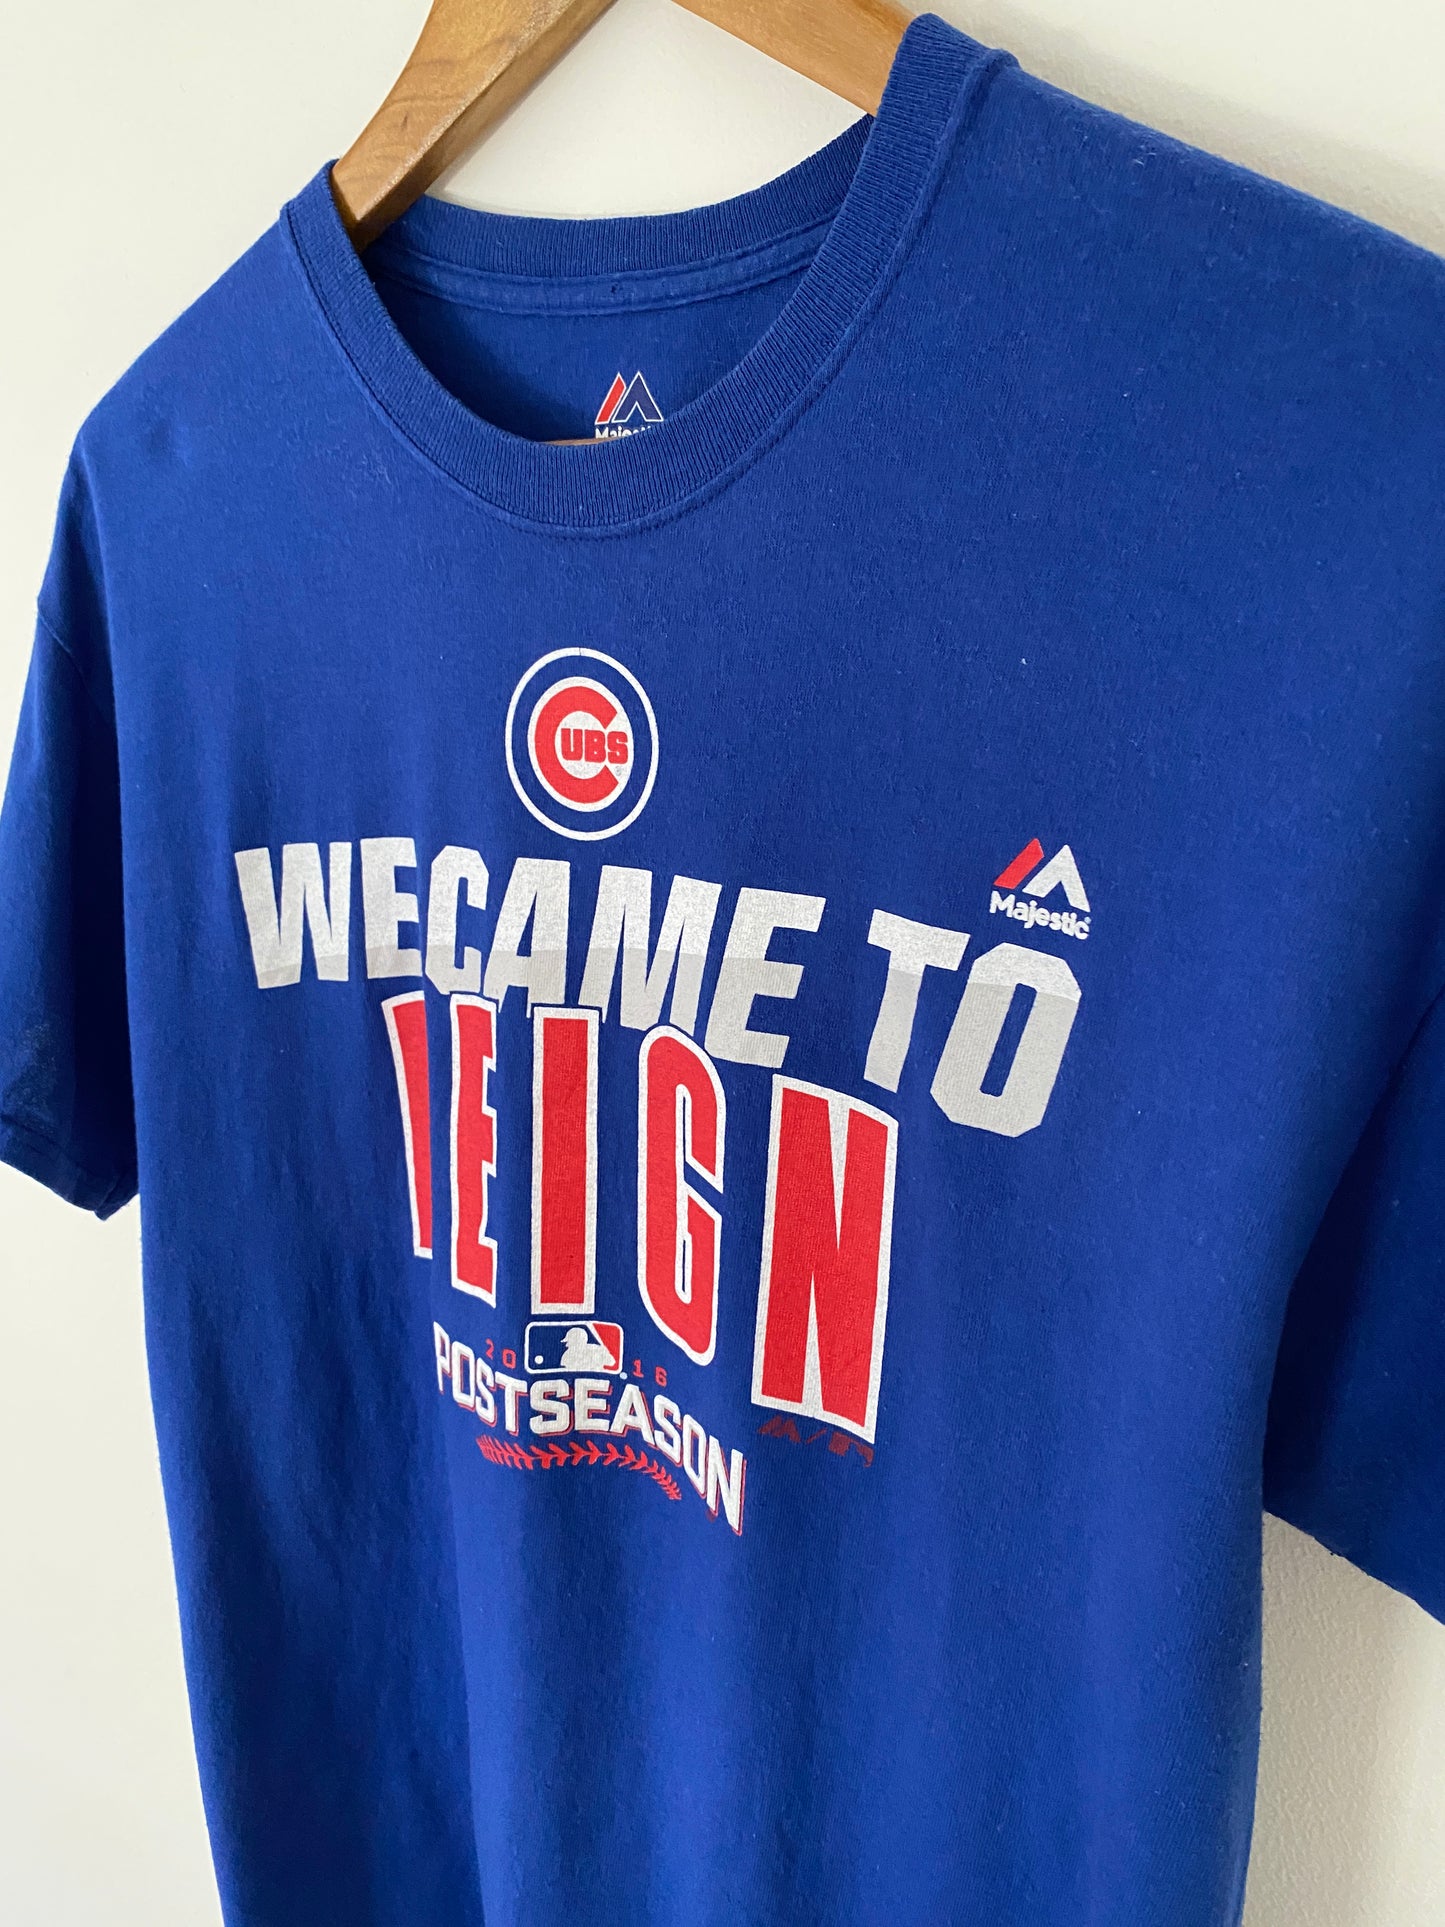 Chicago Cubs 2016 Postseason T-Shirt - M